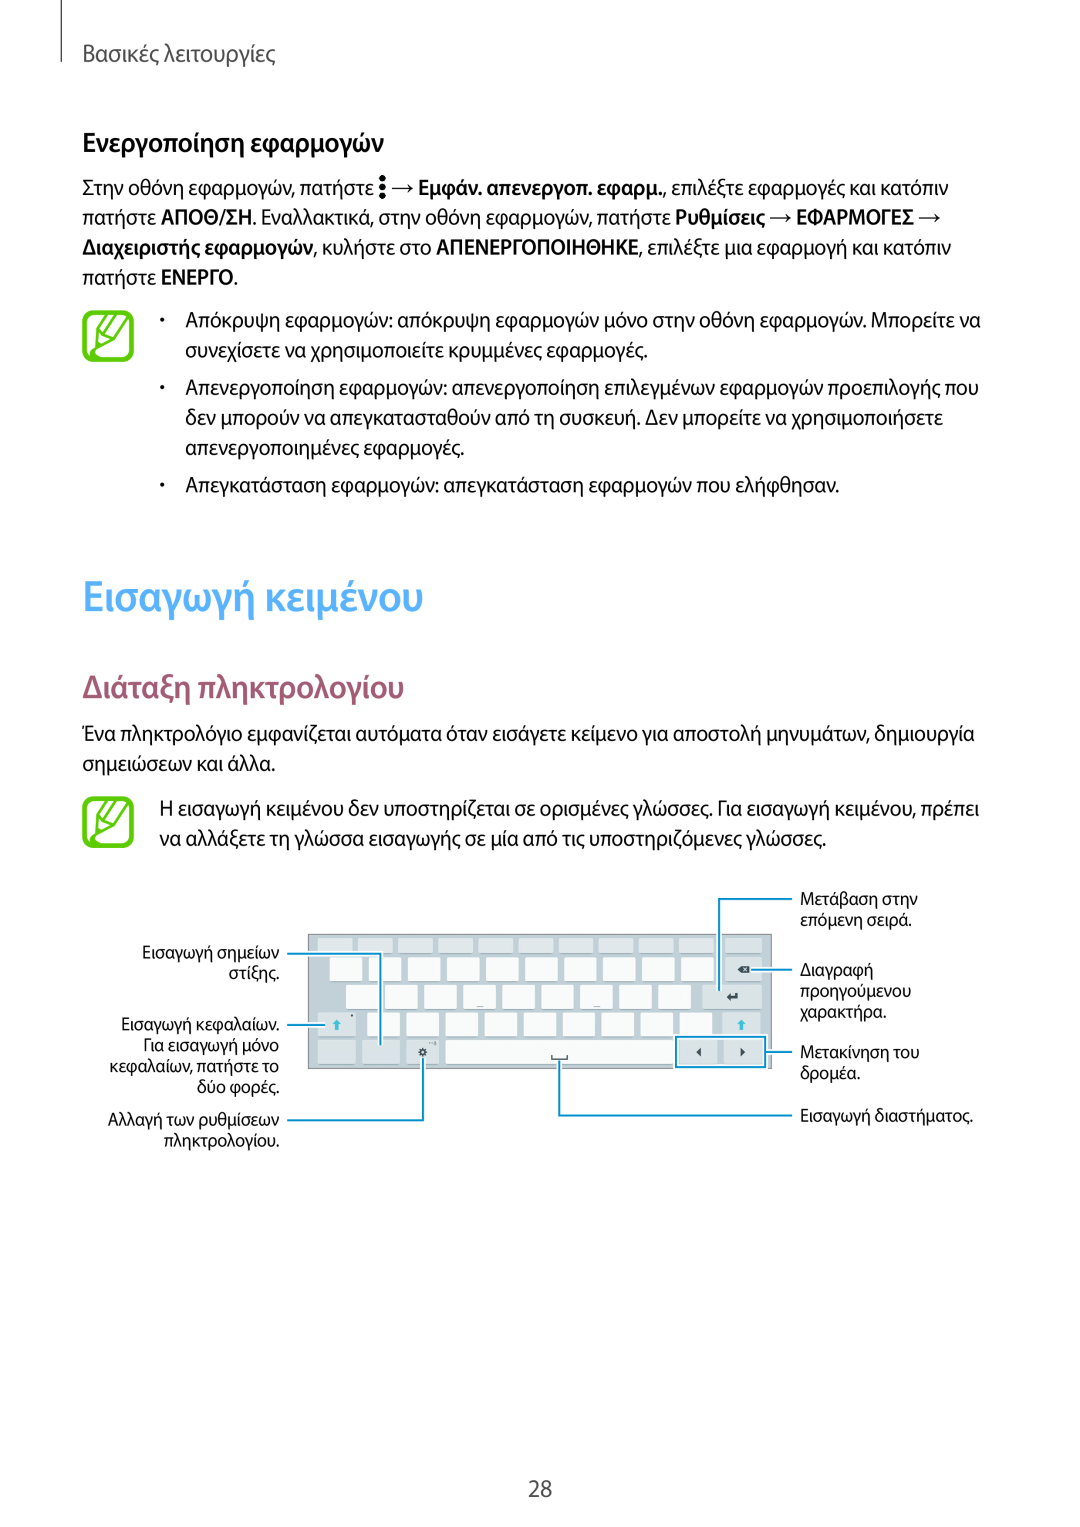 Samsung SM-T805NTSAEUR manual Εισαγωγή κειμένου, Διάταξη πληκτρολογίου, Ενεργοποίηση εφαρμογών, Βασικές λειτουργίες 